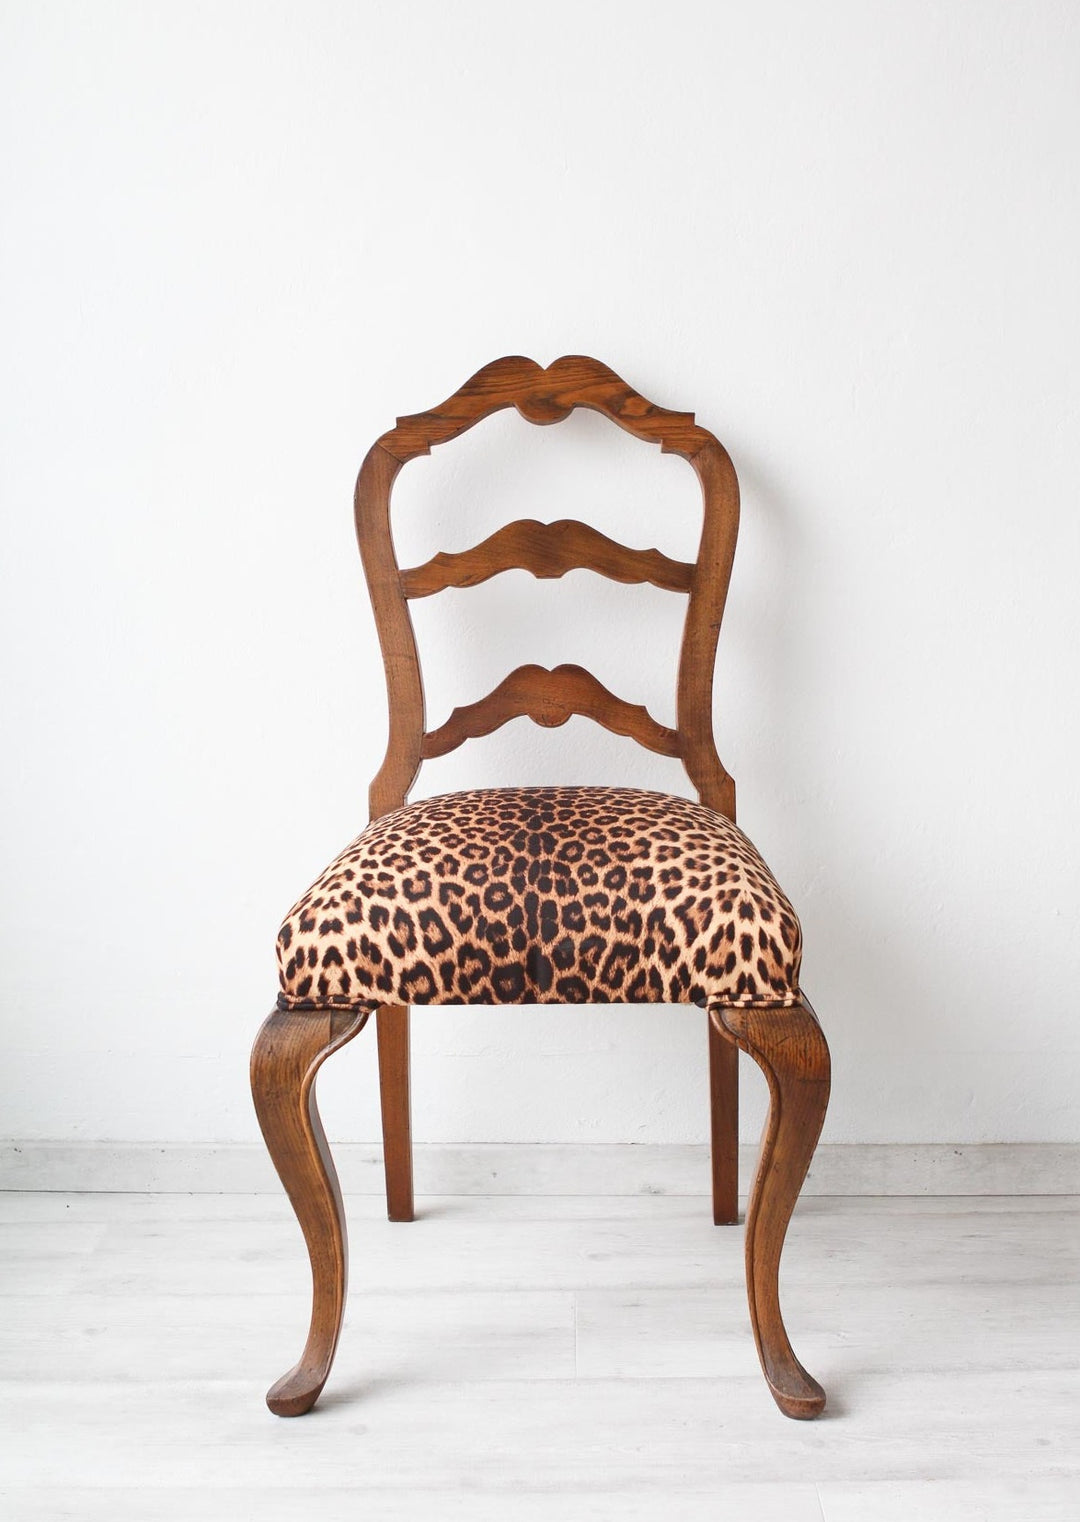 Antigua silla madera tapizada leopardo (VENDIDA)